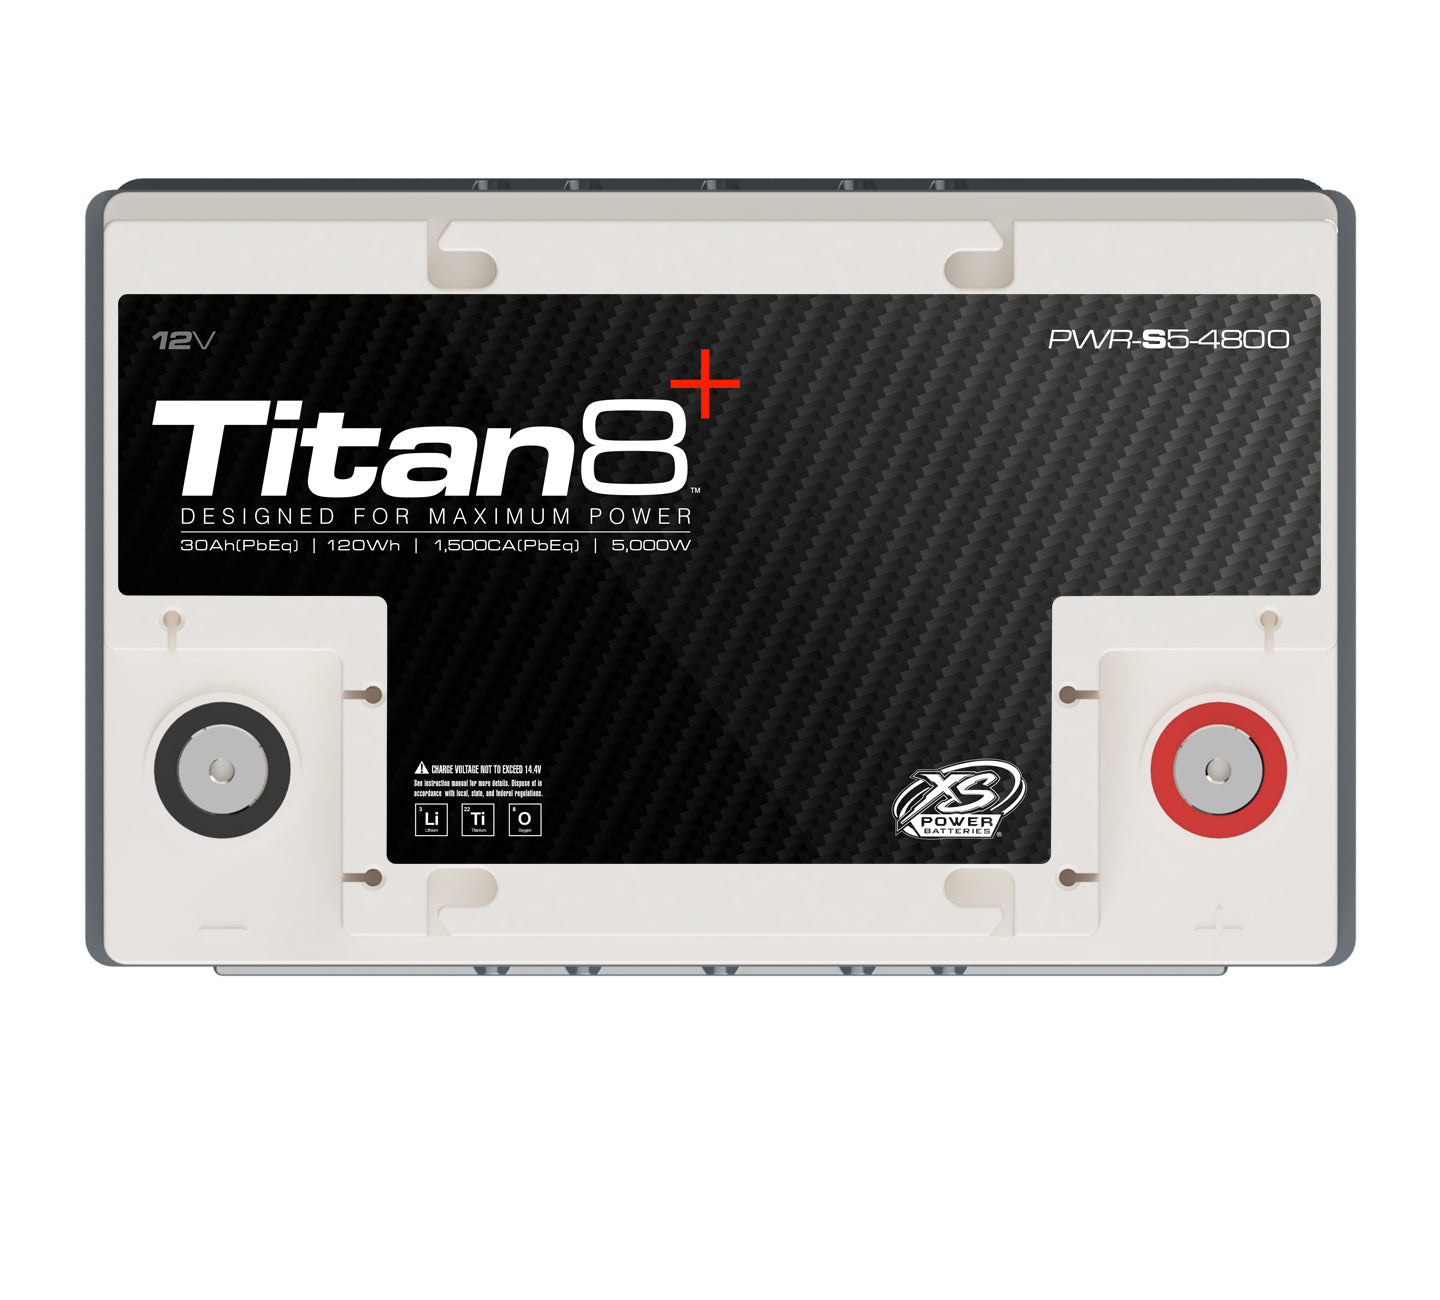 (OPEN BOX) PWR-S5-4800 XS Power Titan8 12VDC Group 48 Lithium LTO Car Audio Vehicle Battery 5000W 120Wh